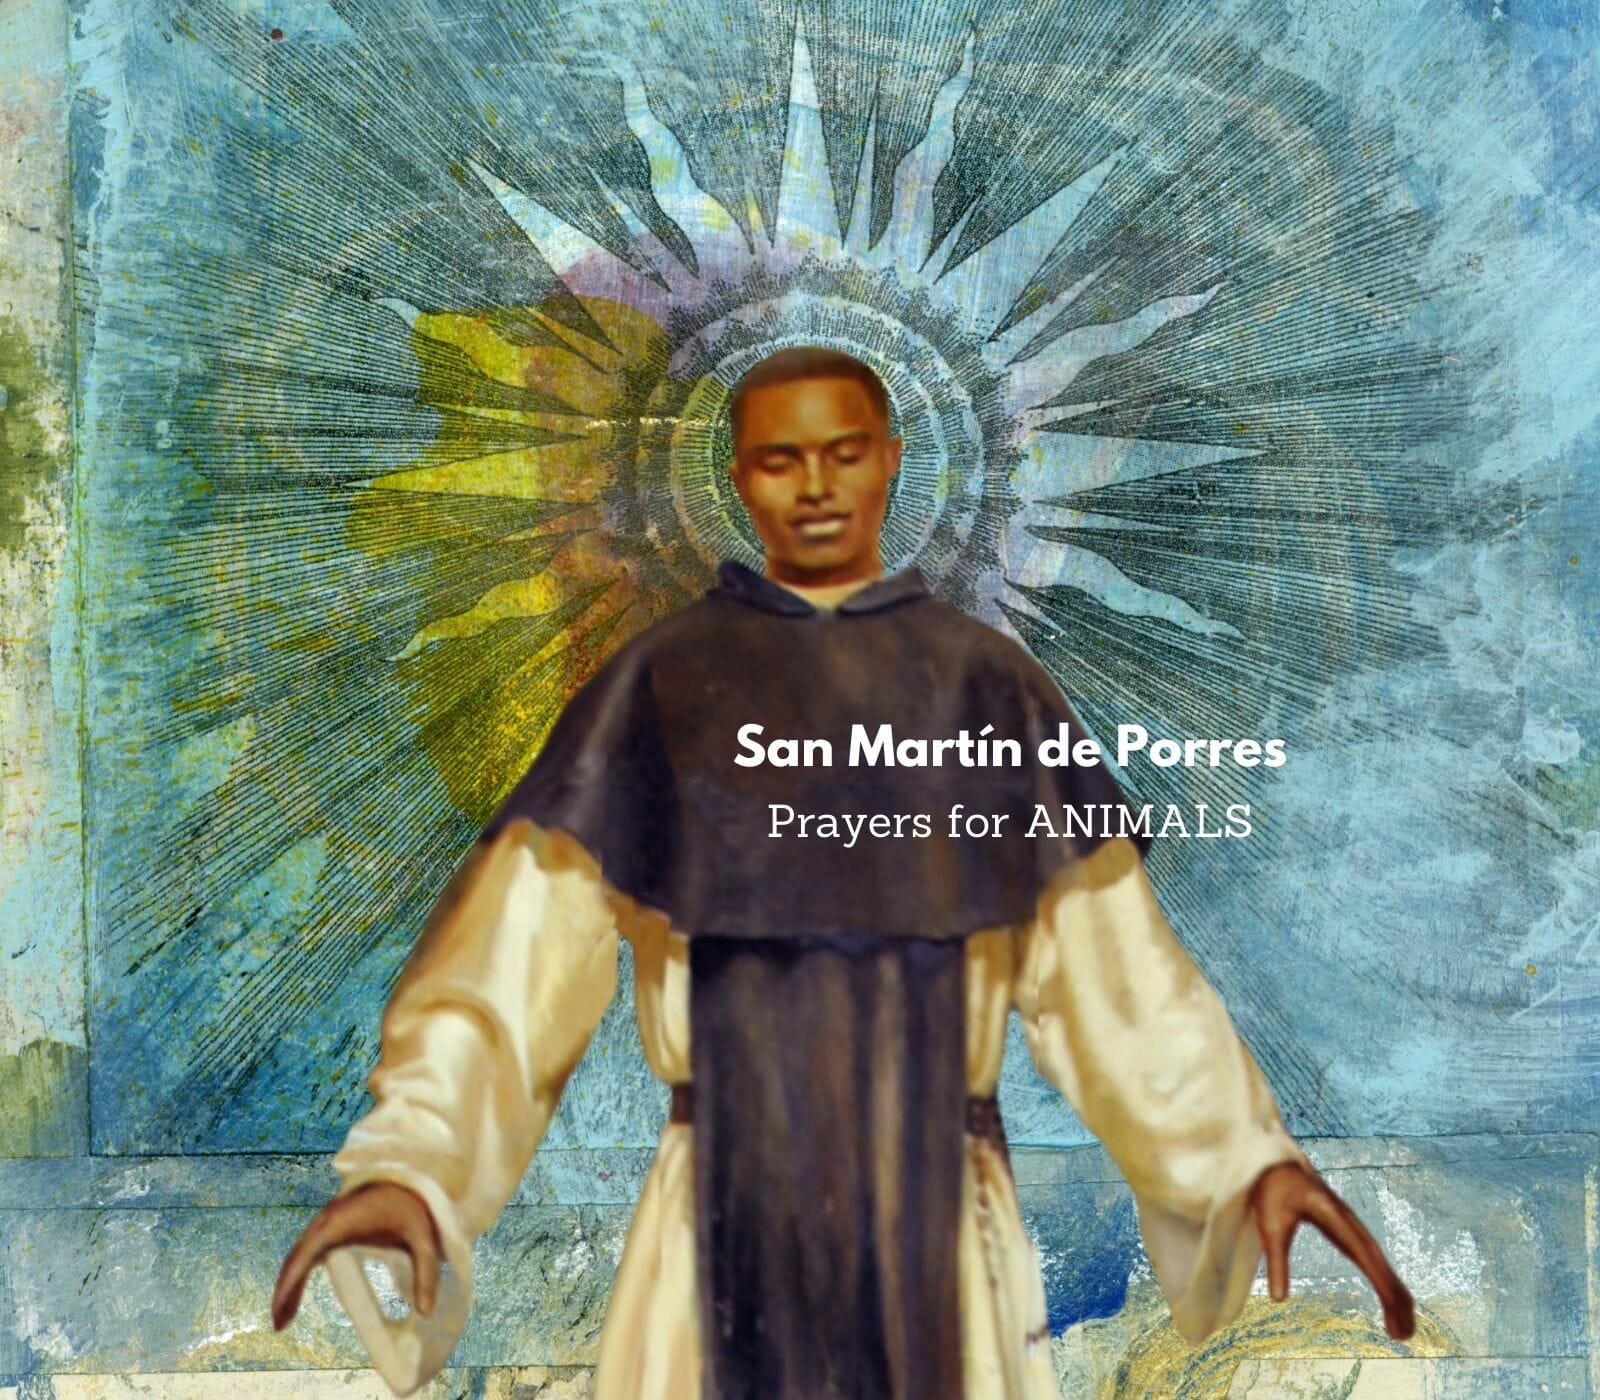 Saint Martín de Porres